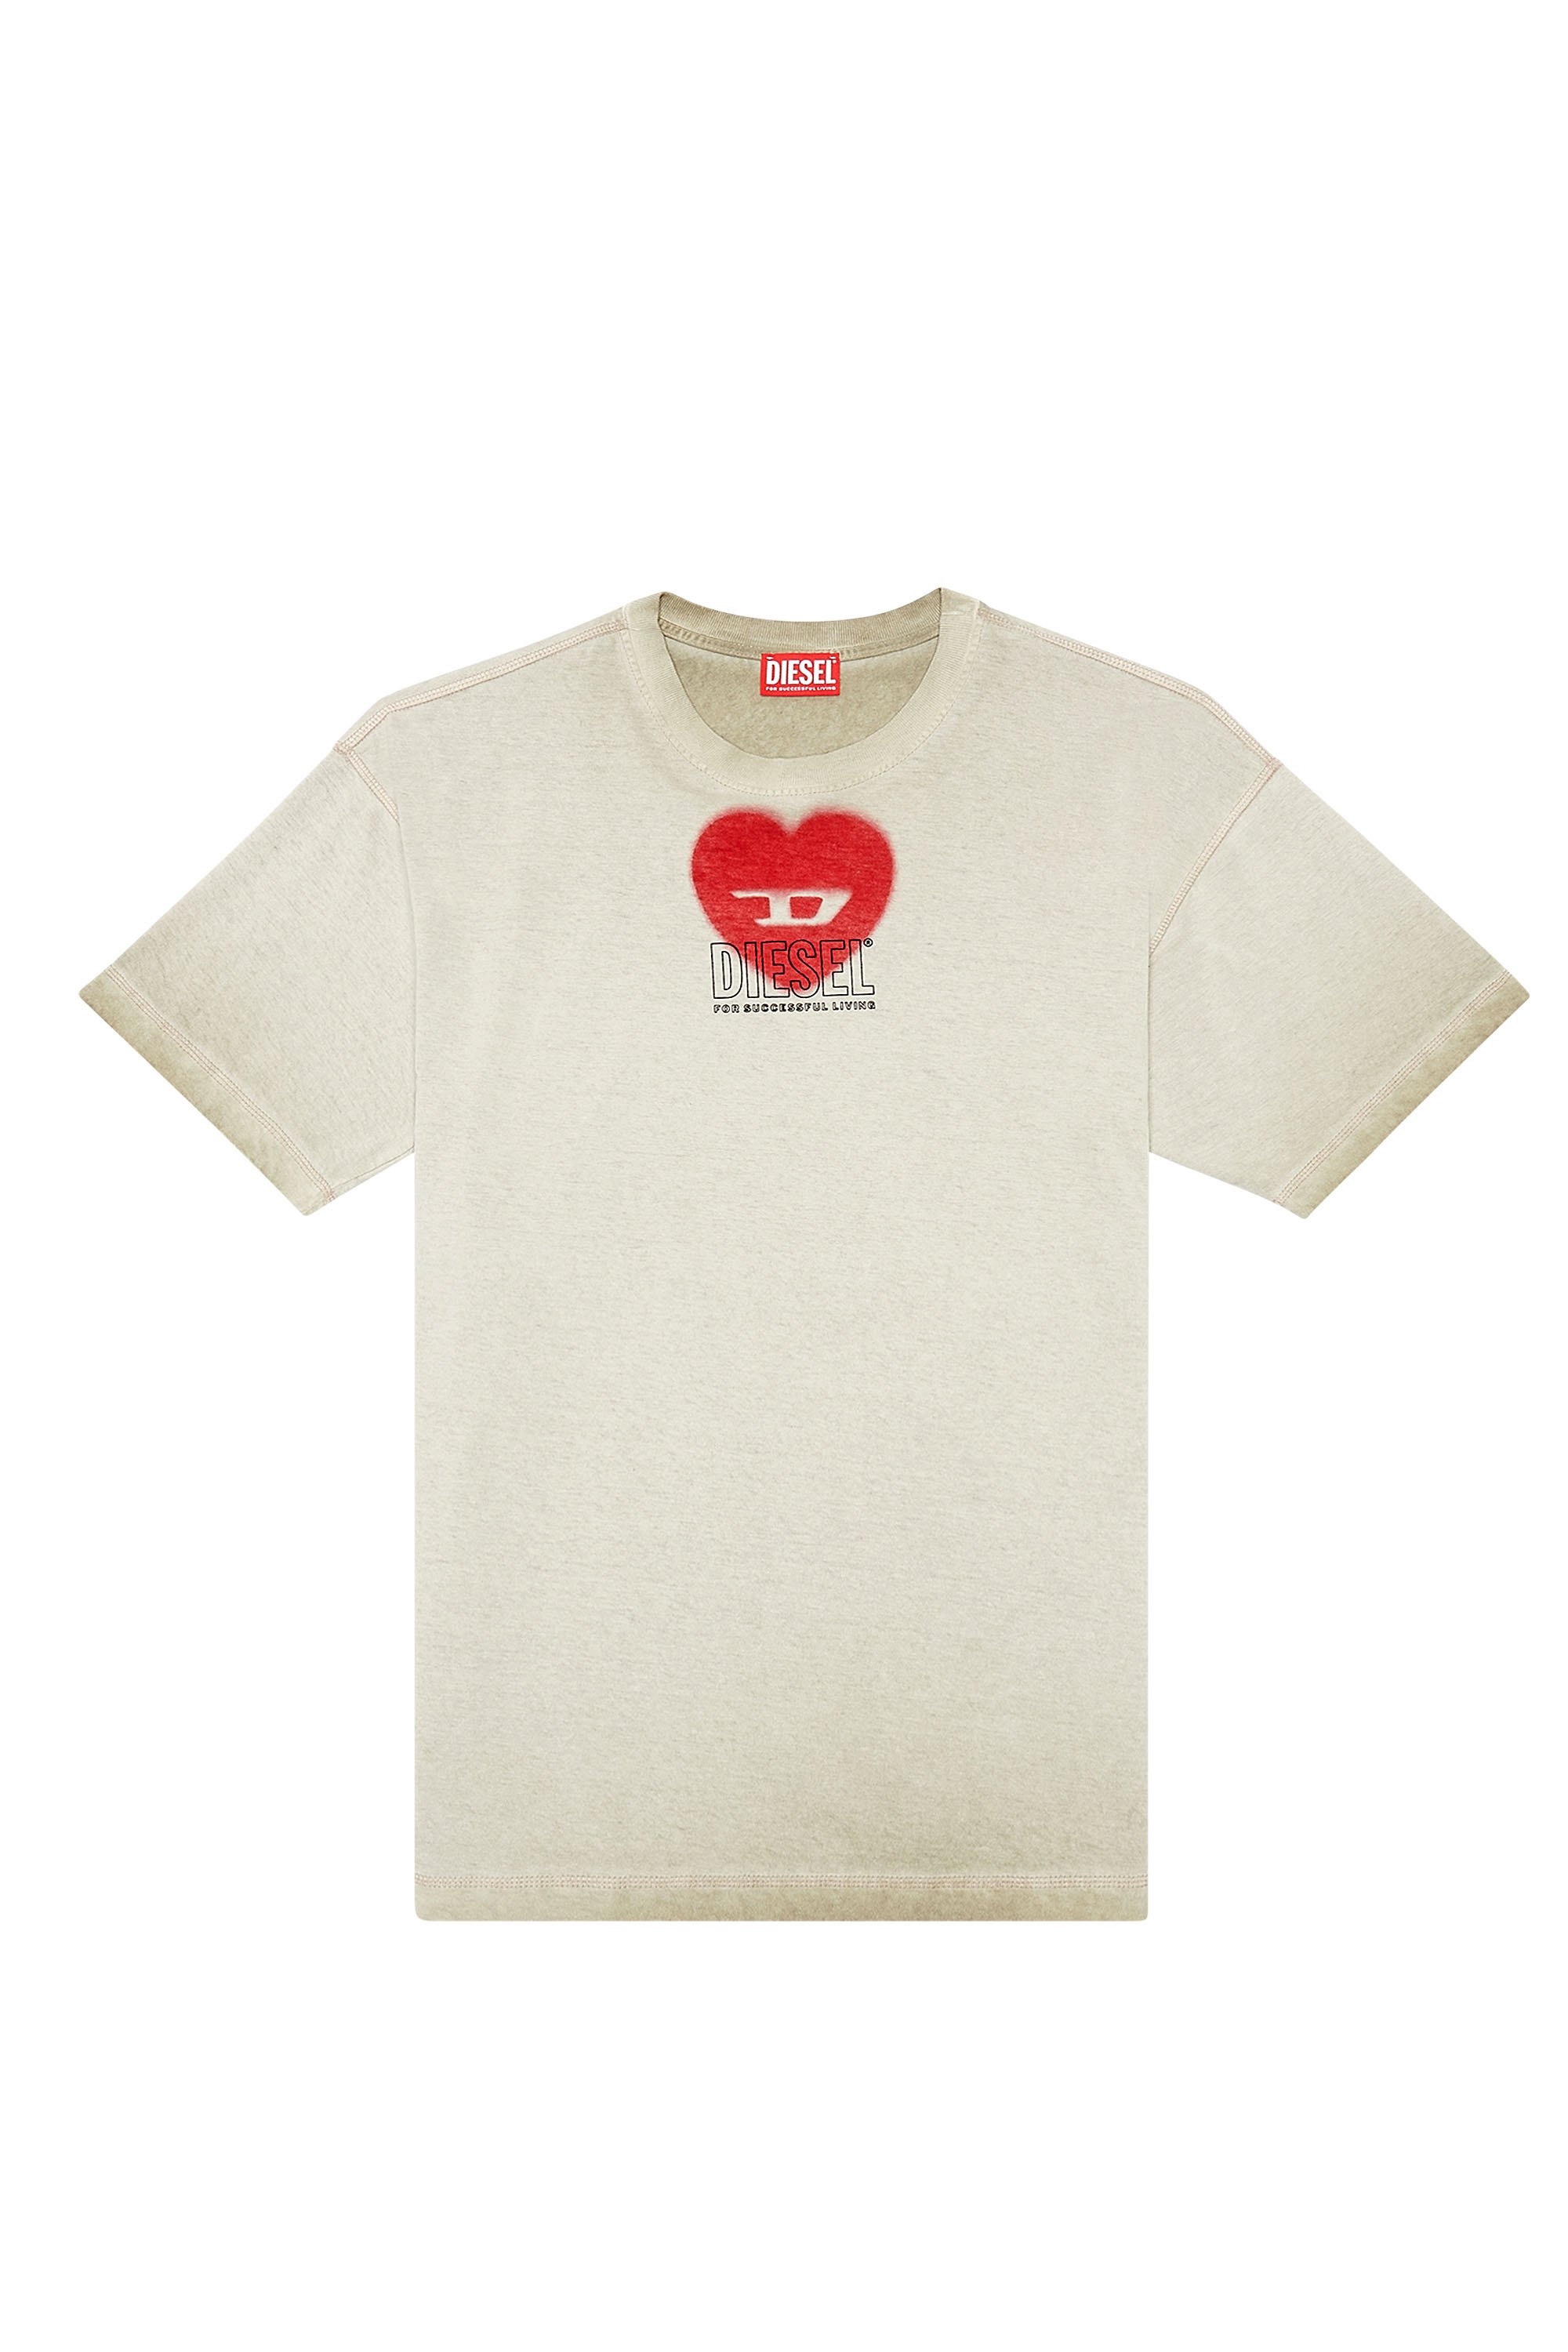 Diesel - T-BUXT-N4, Man T-shirt with heart print in Beige - Image 4